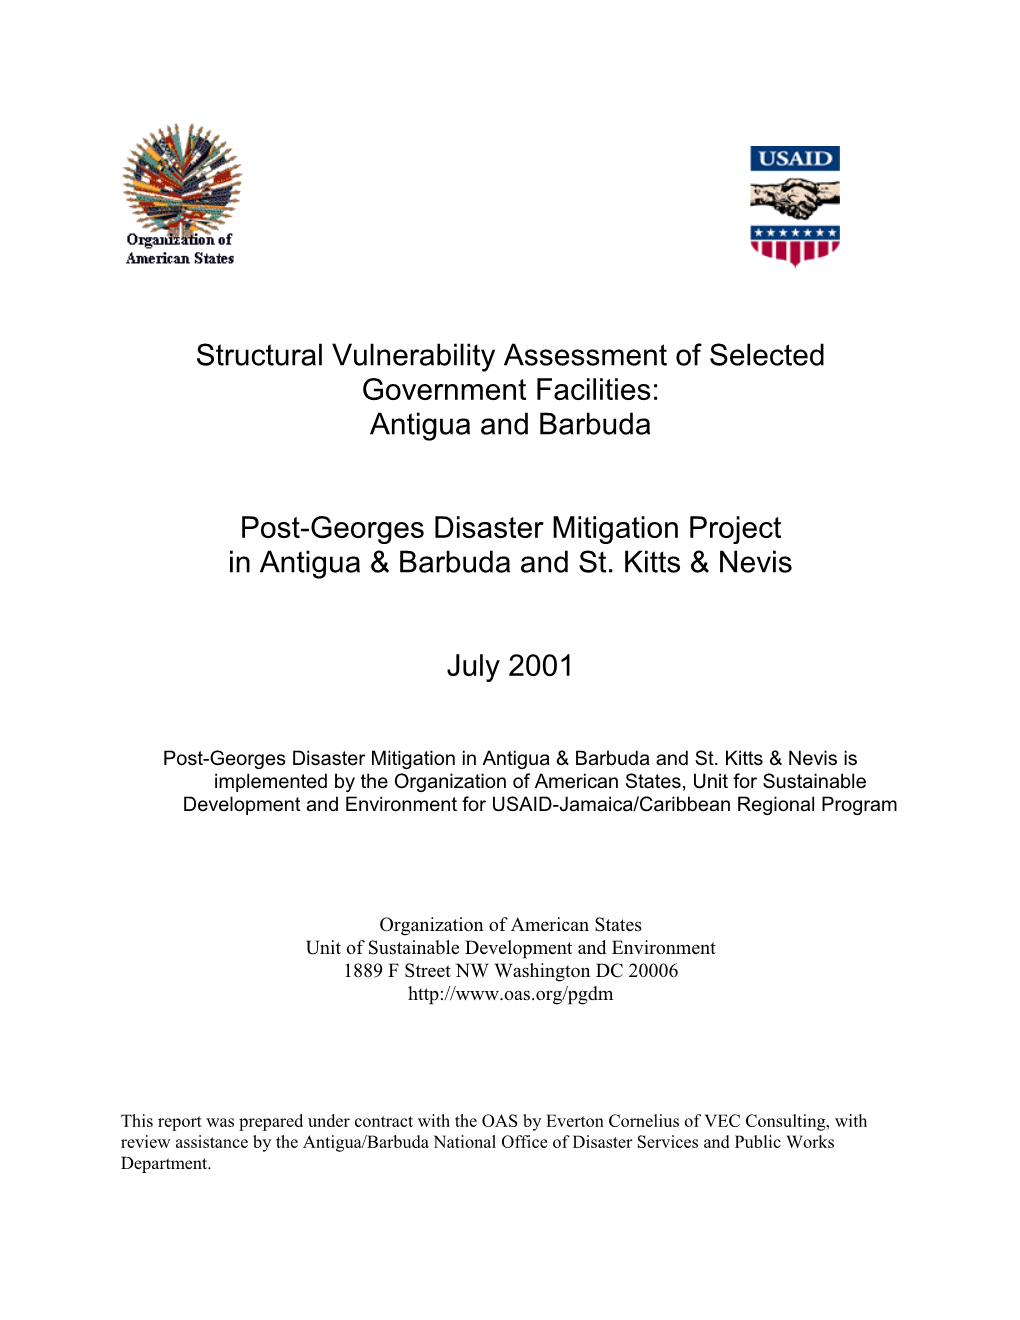 Structural Vulnerability Assessment: Antigua/Barbuda